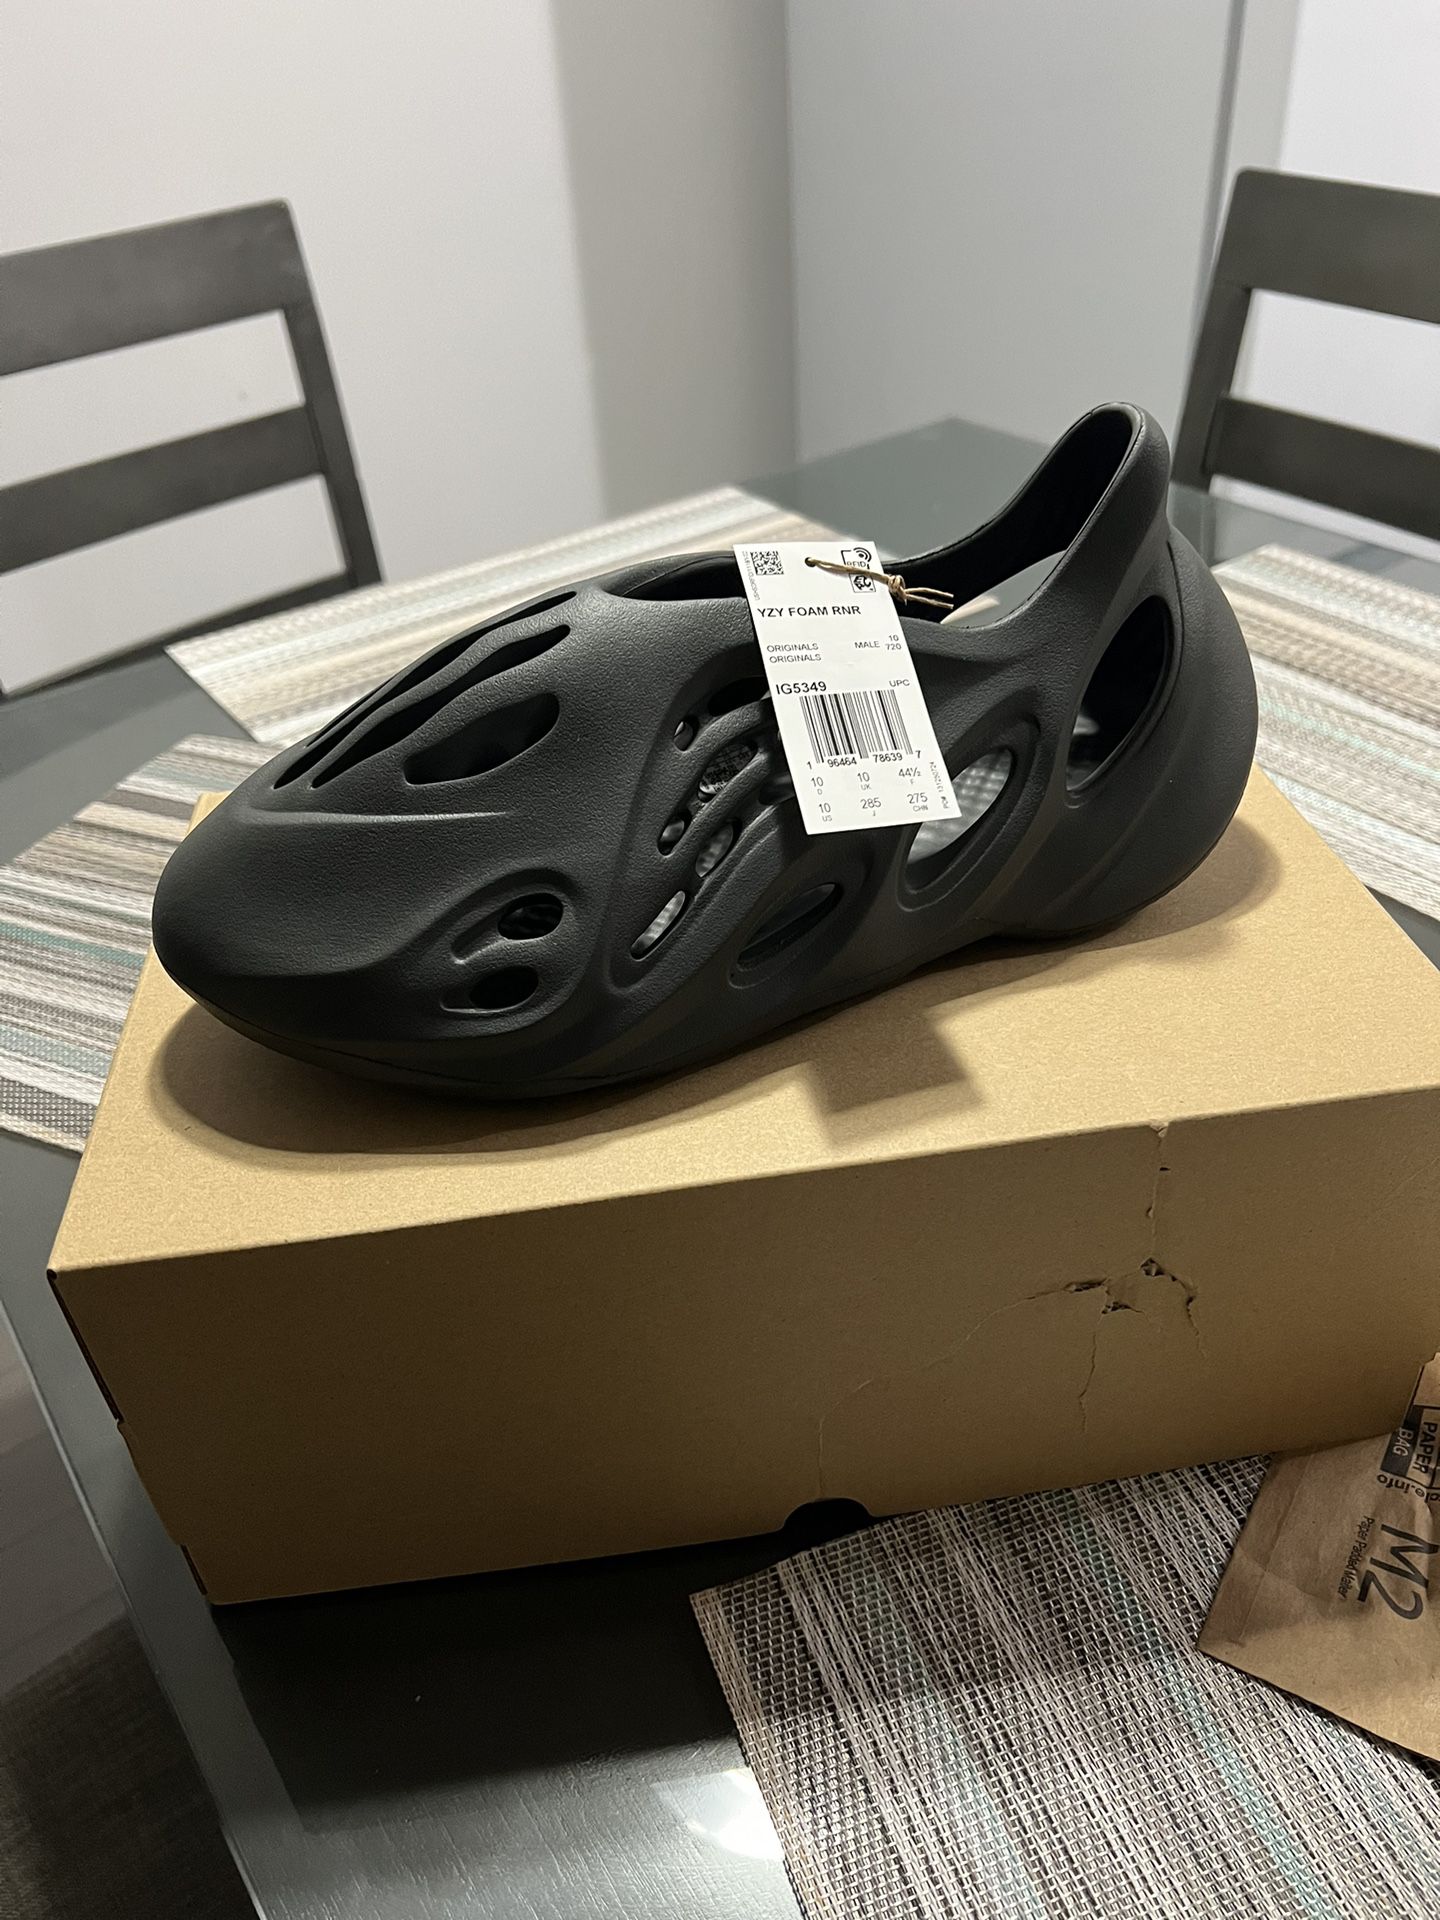 adidas Yeezy Foam Runner Carbon IG5349 Size 11